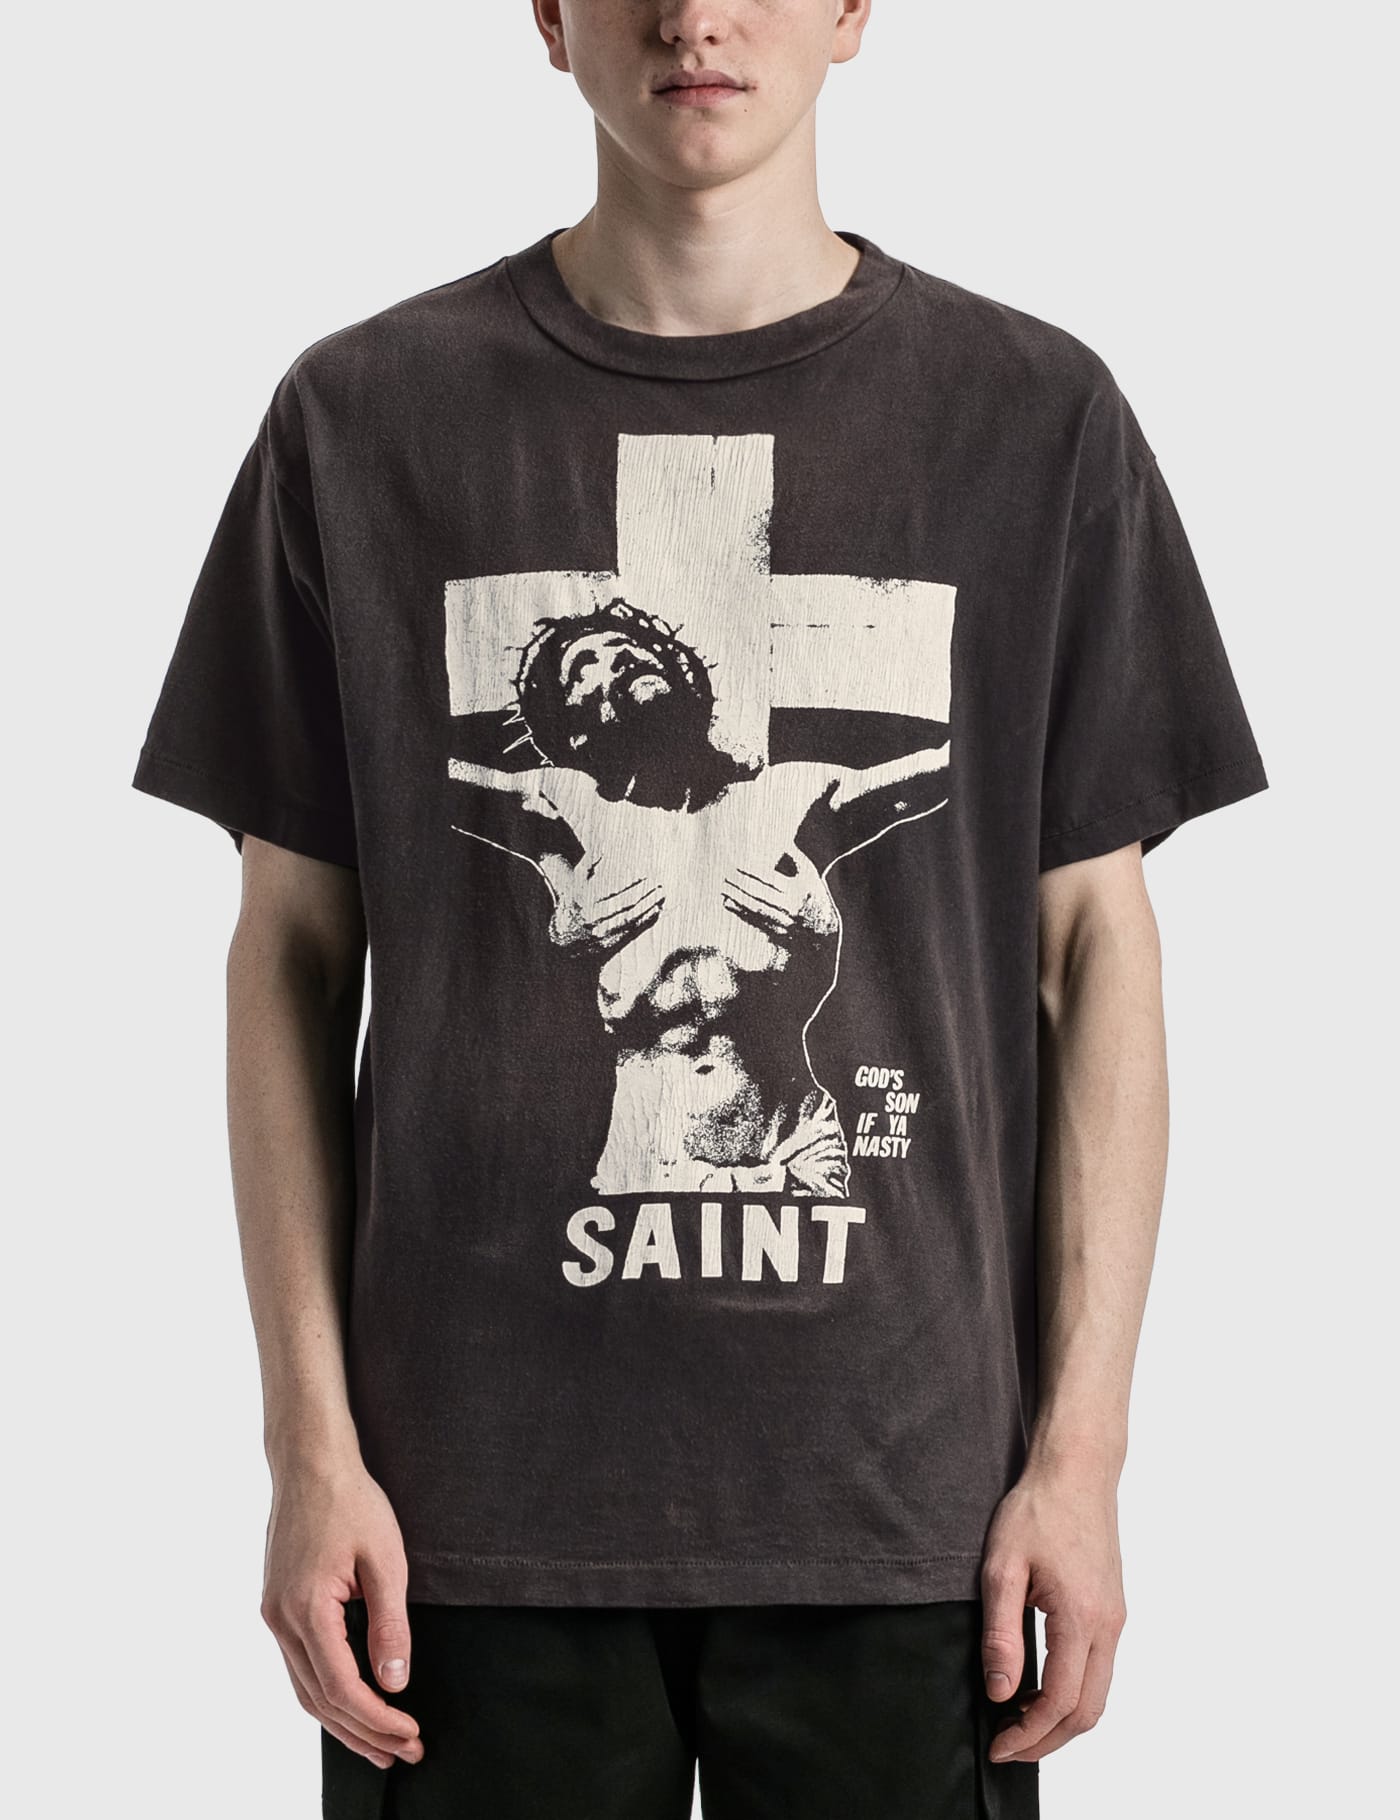 Saint Michael - SAINT T-SHIRT | HBX - Globally Curated Fashion and 